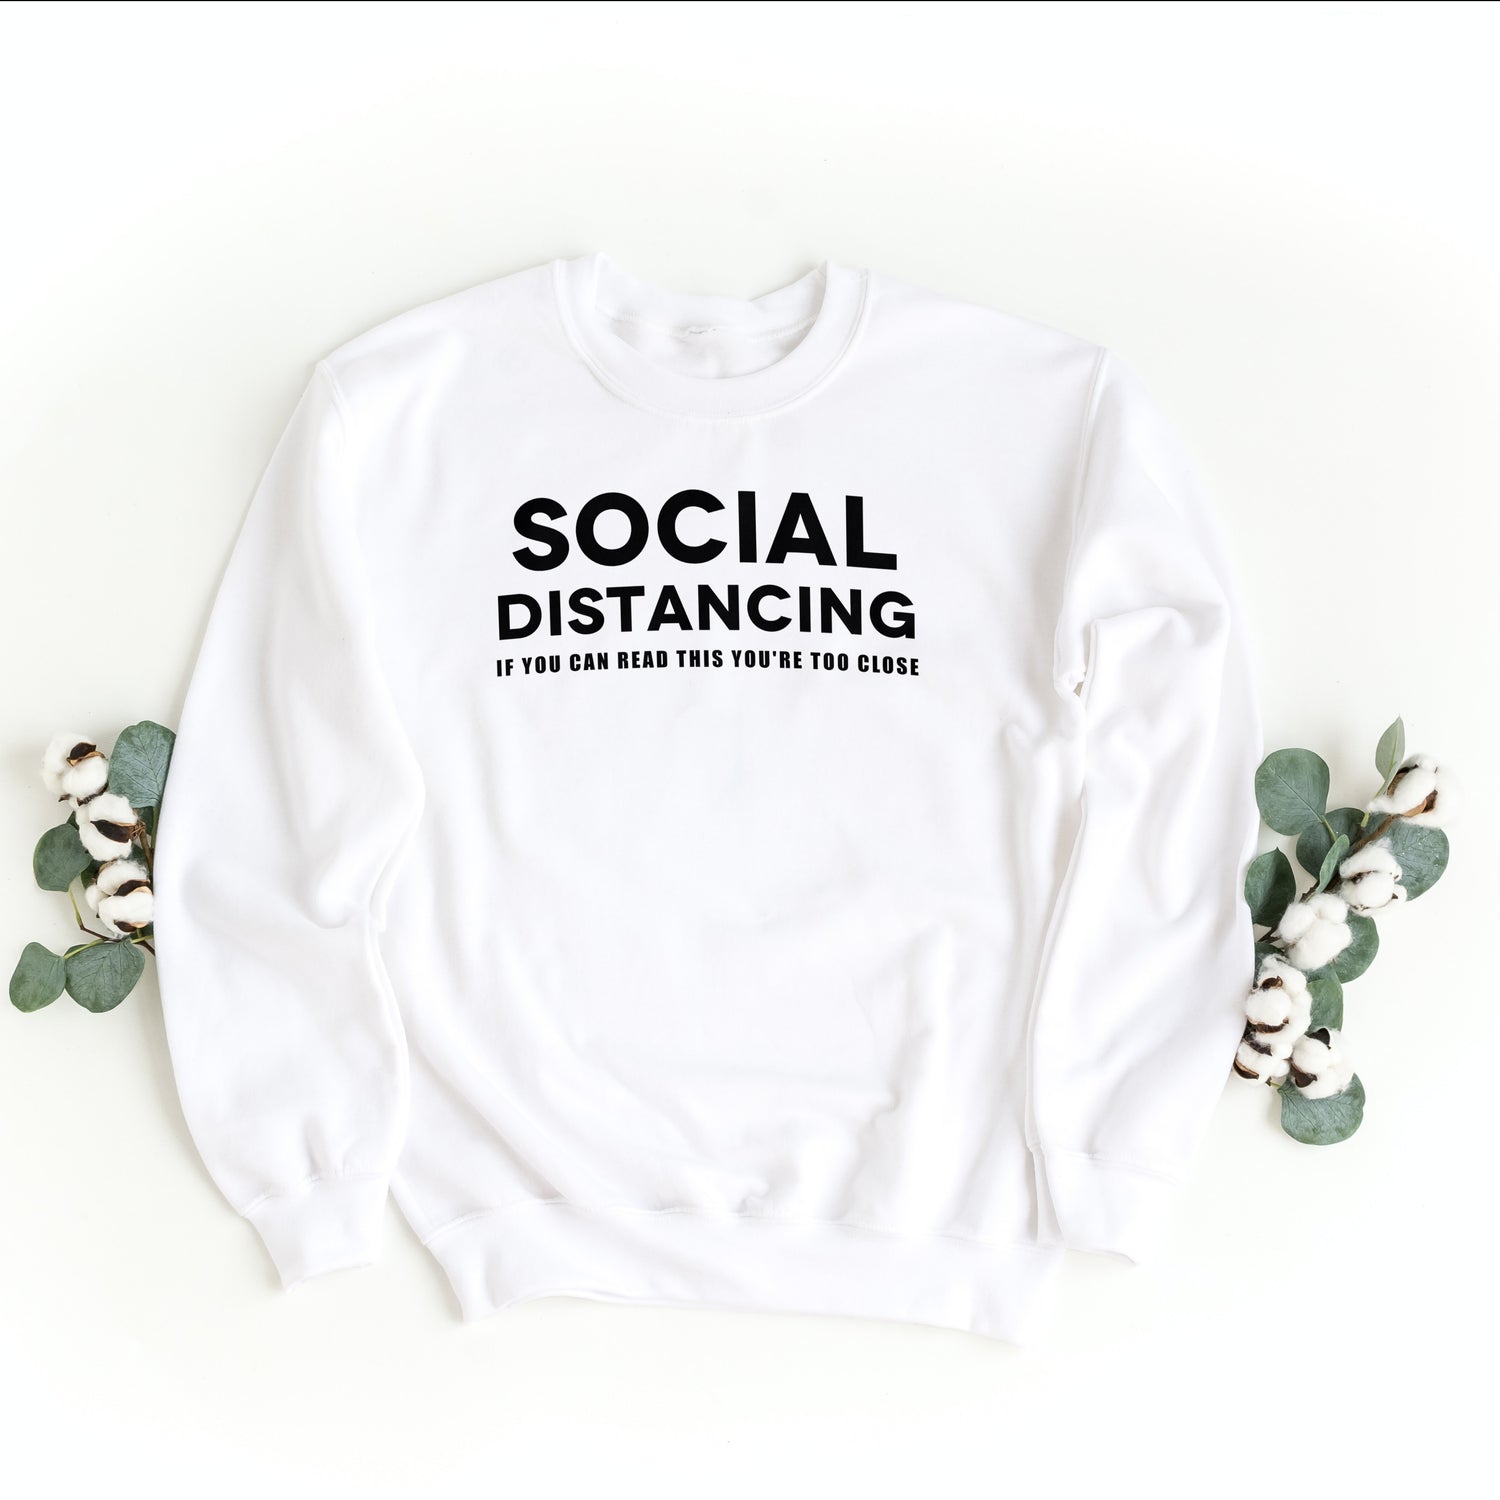 Social Distance Shirt - Social Distancing Sweatshirt - Crewneck Sweater